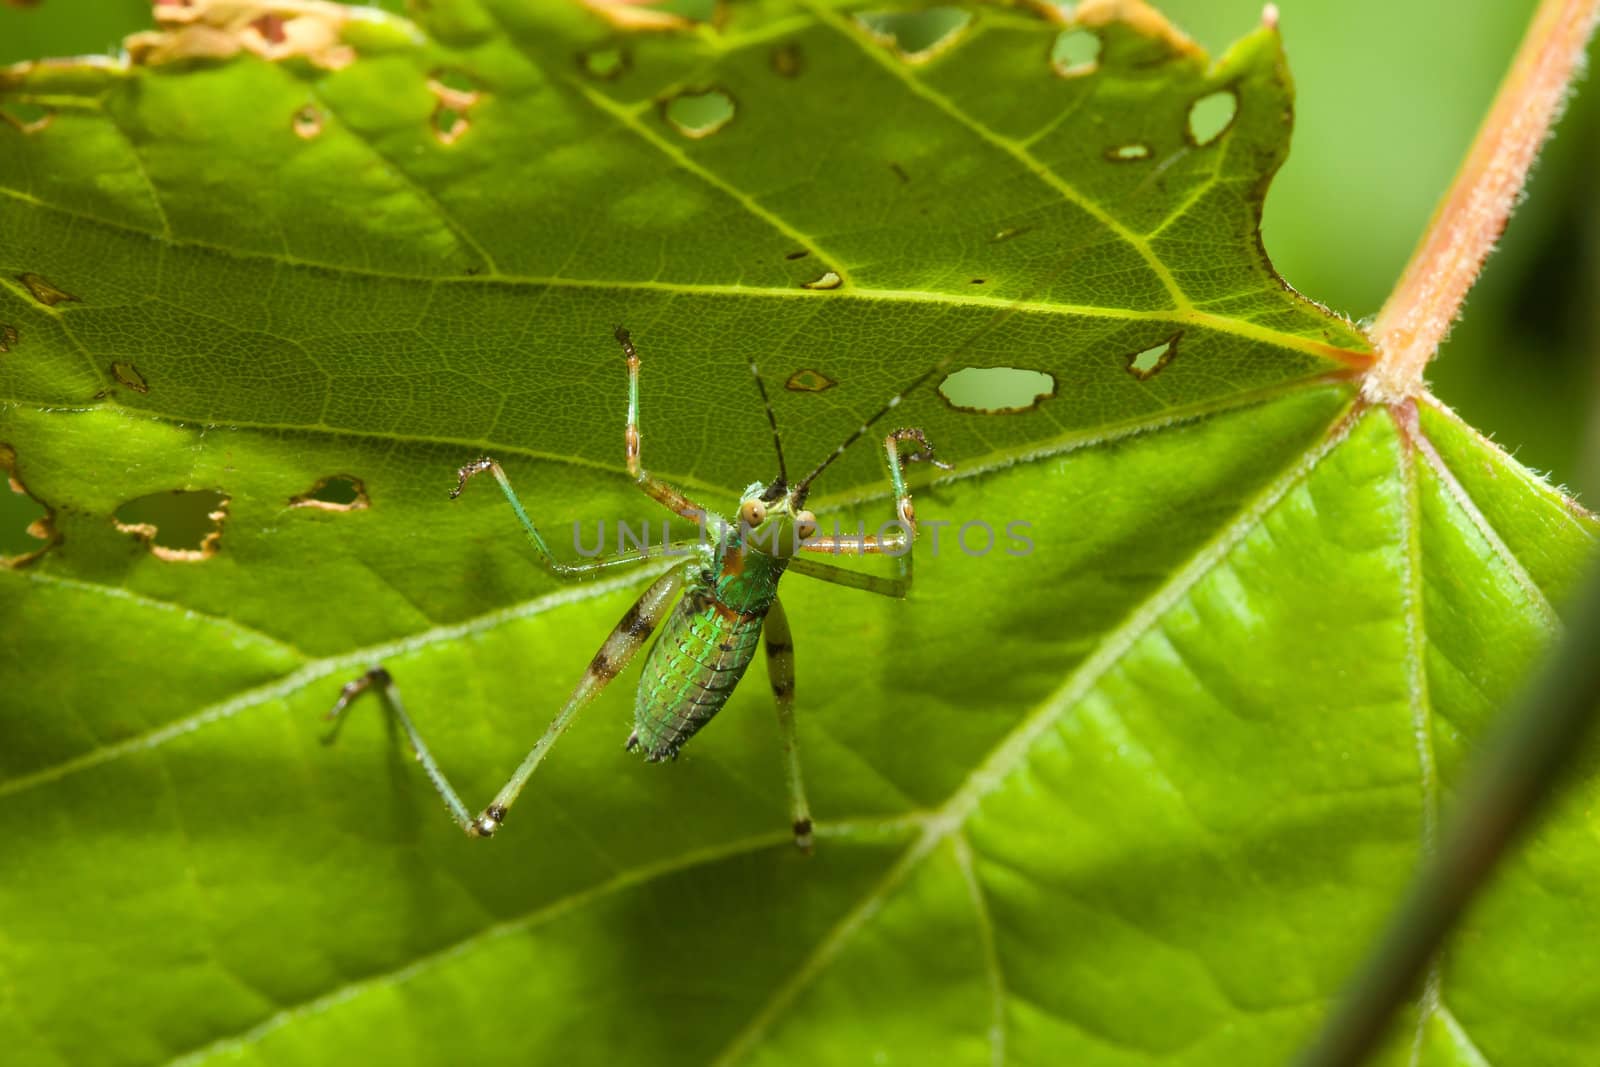 Bush Cricket (Tettigoniidae) by Coffee999